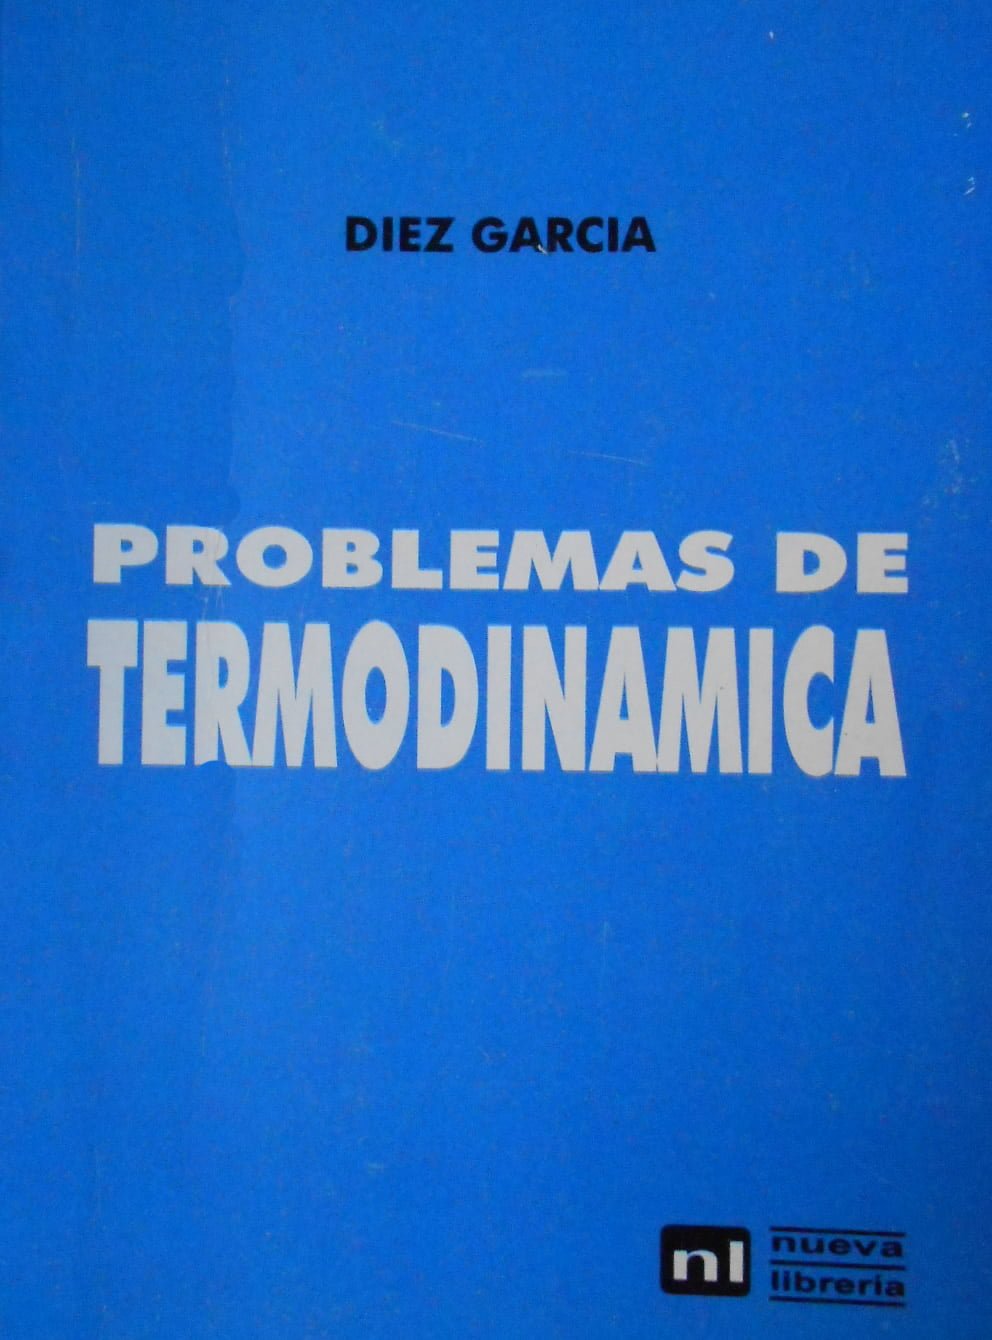 Problemas de Termodinámica 1 Edición Diez Garcia PDF